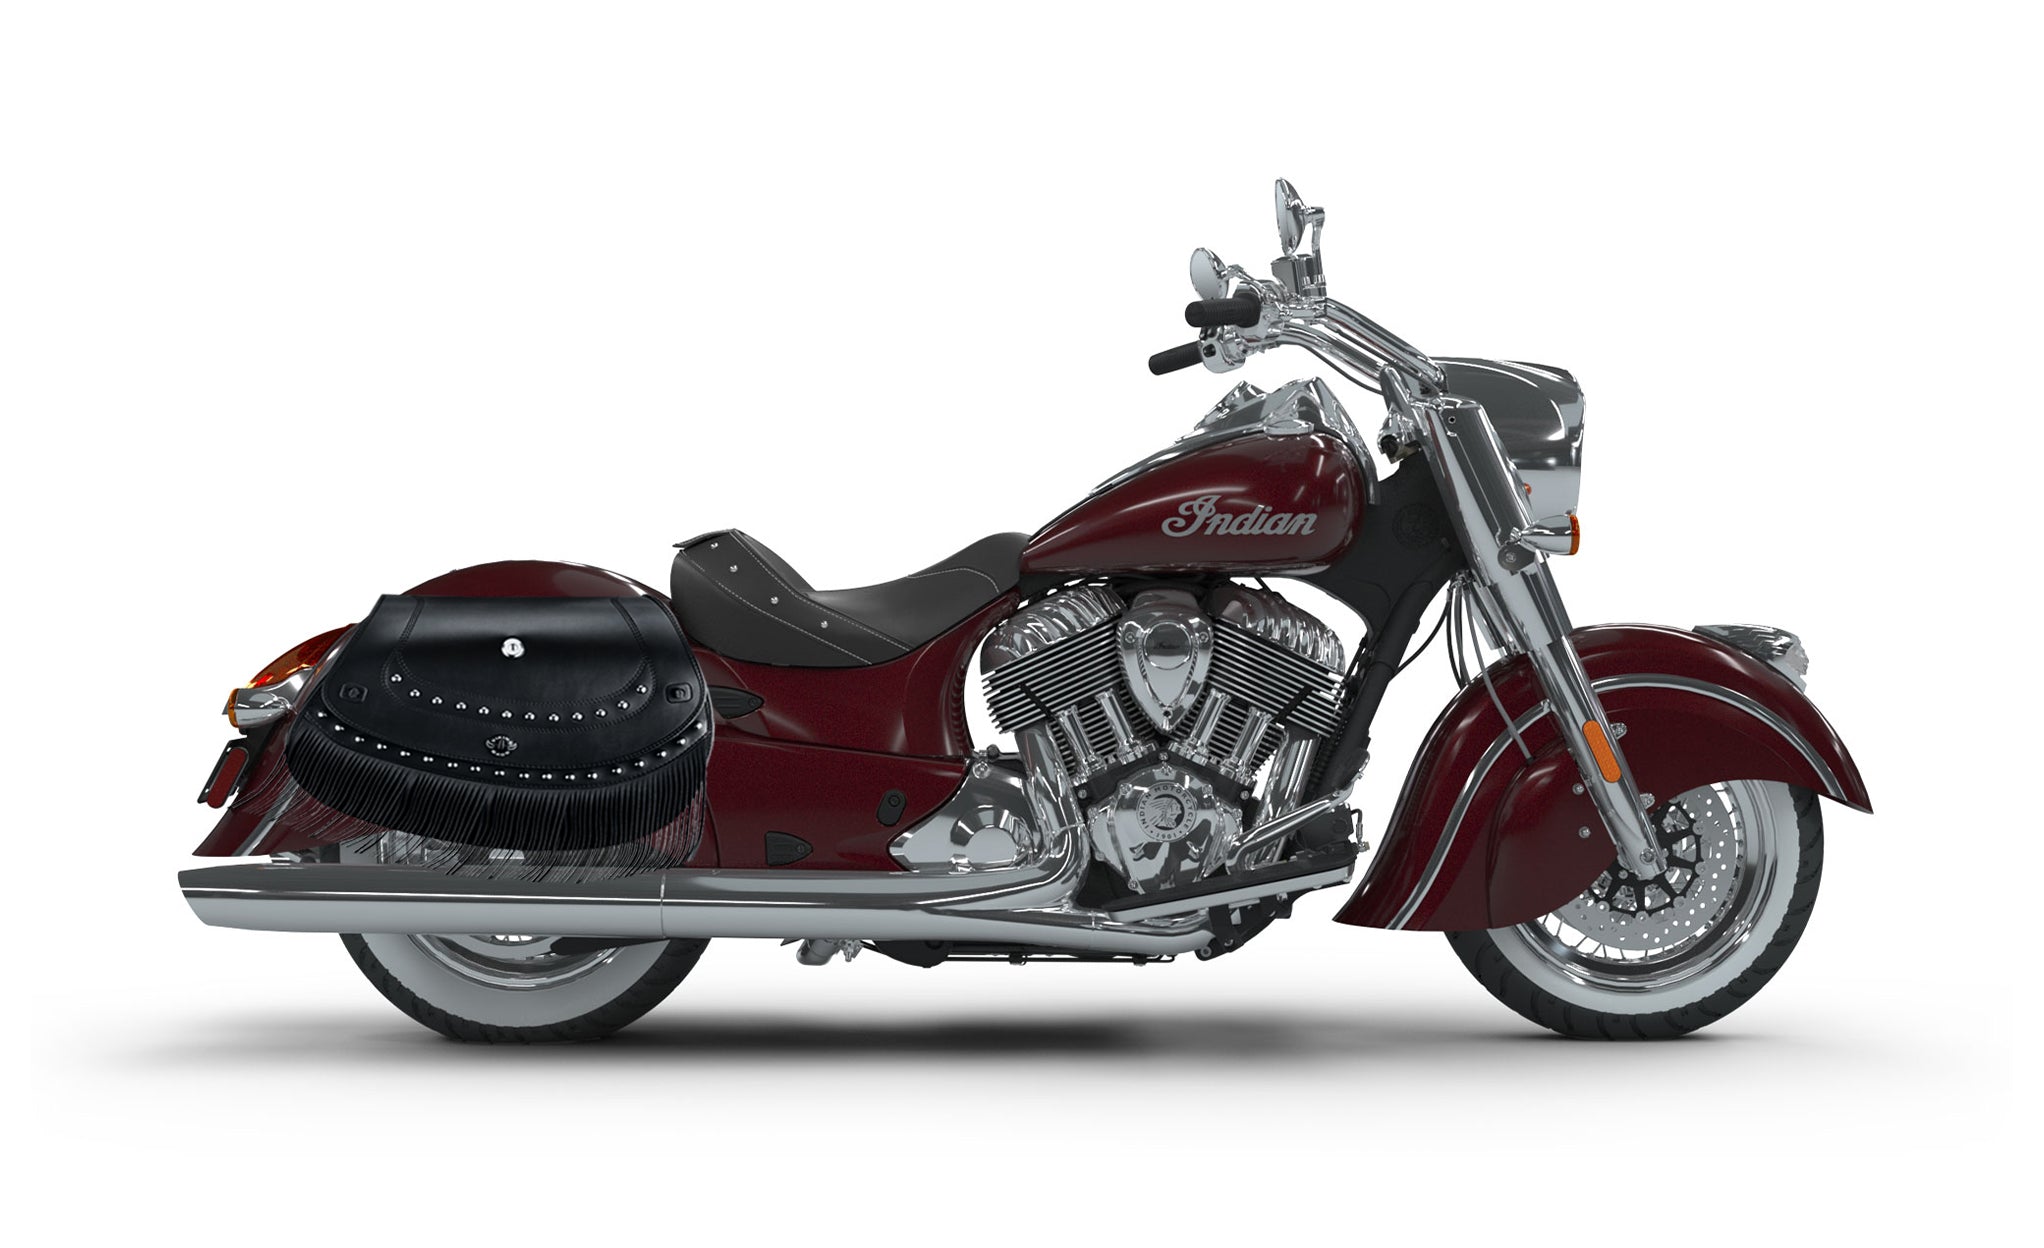 Viking Mohawk Extra Large Indian Chief Classic Specific Leather Motorcycle Saddlebags on Bike Photo @expand